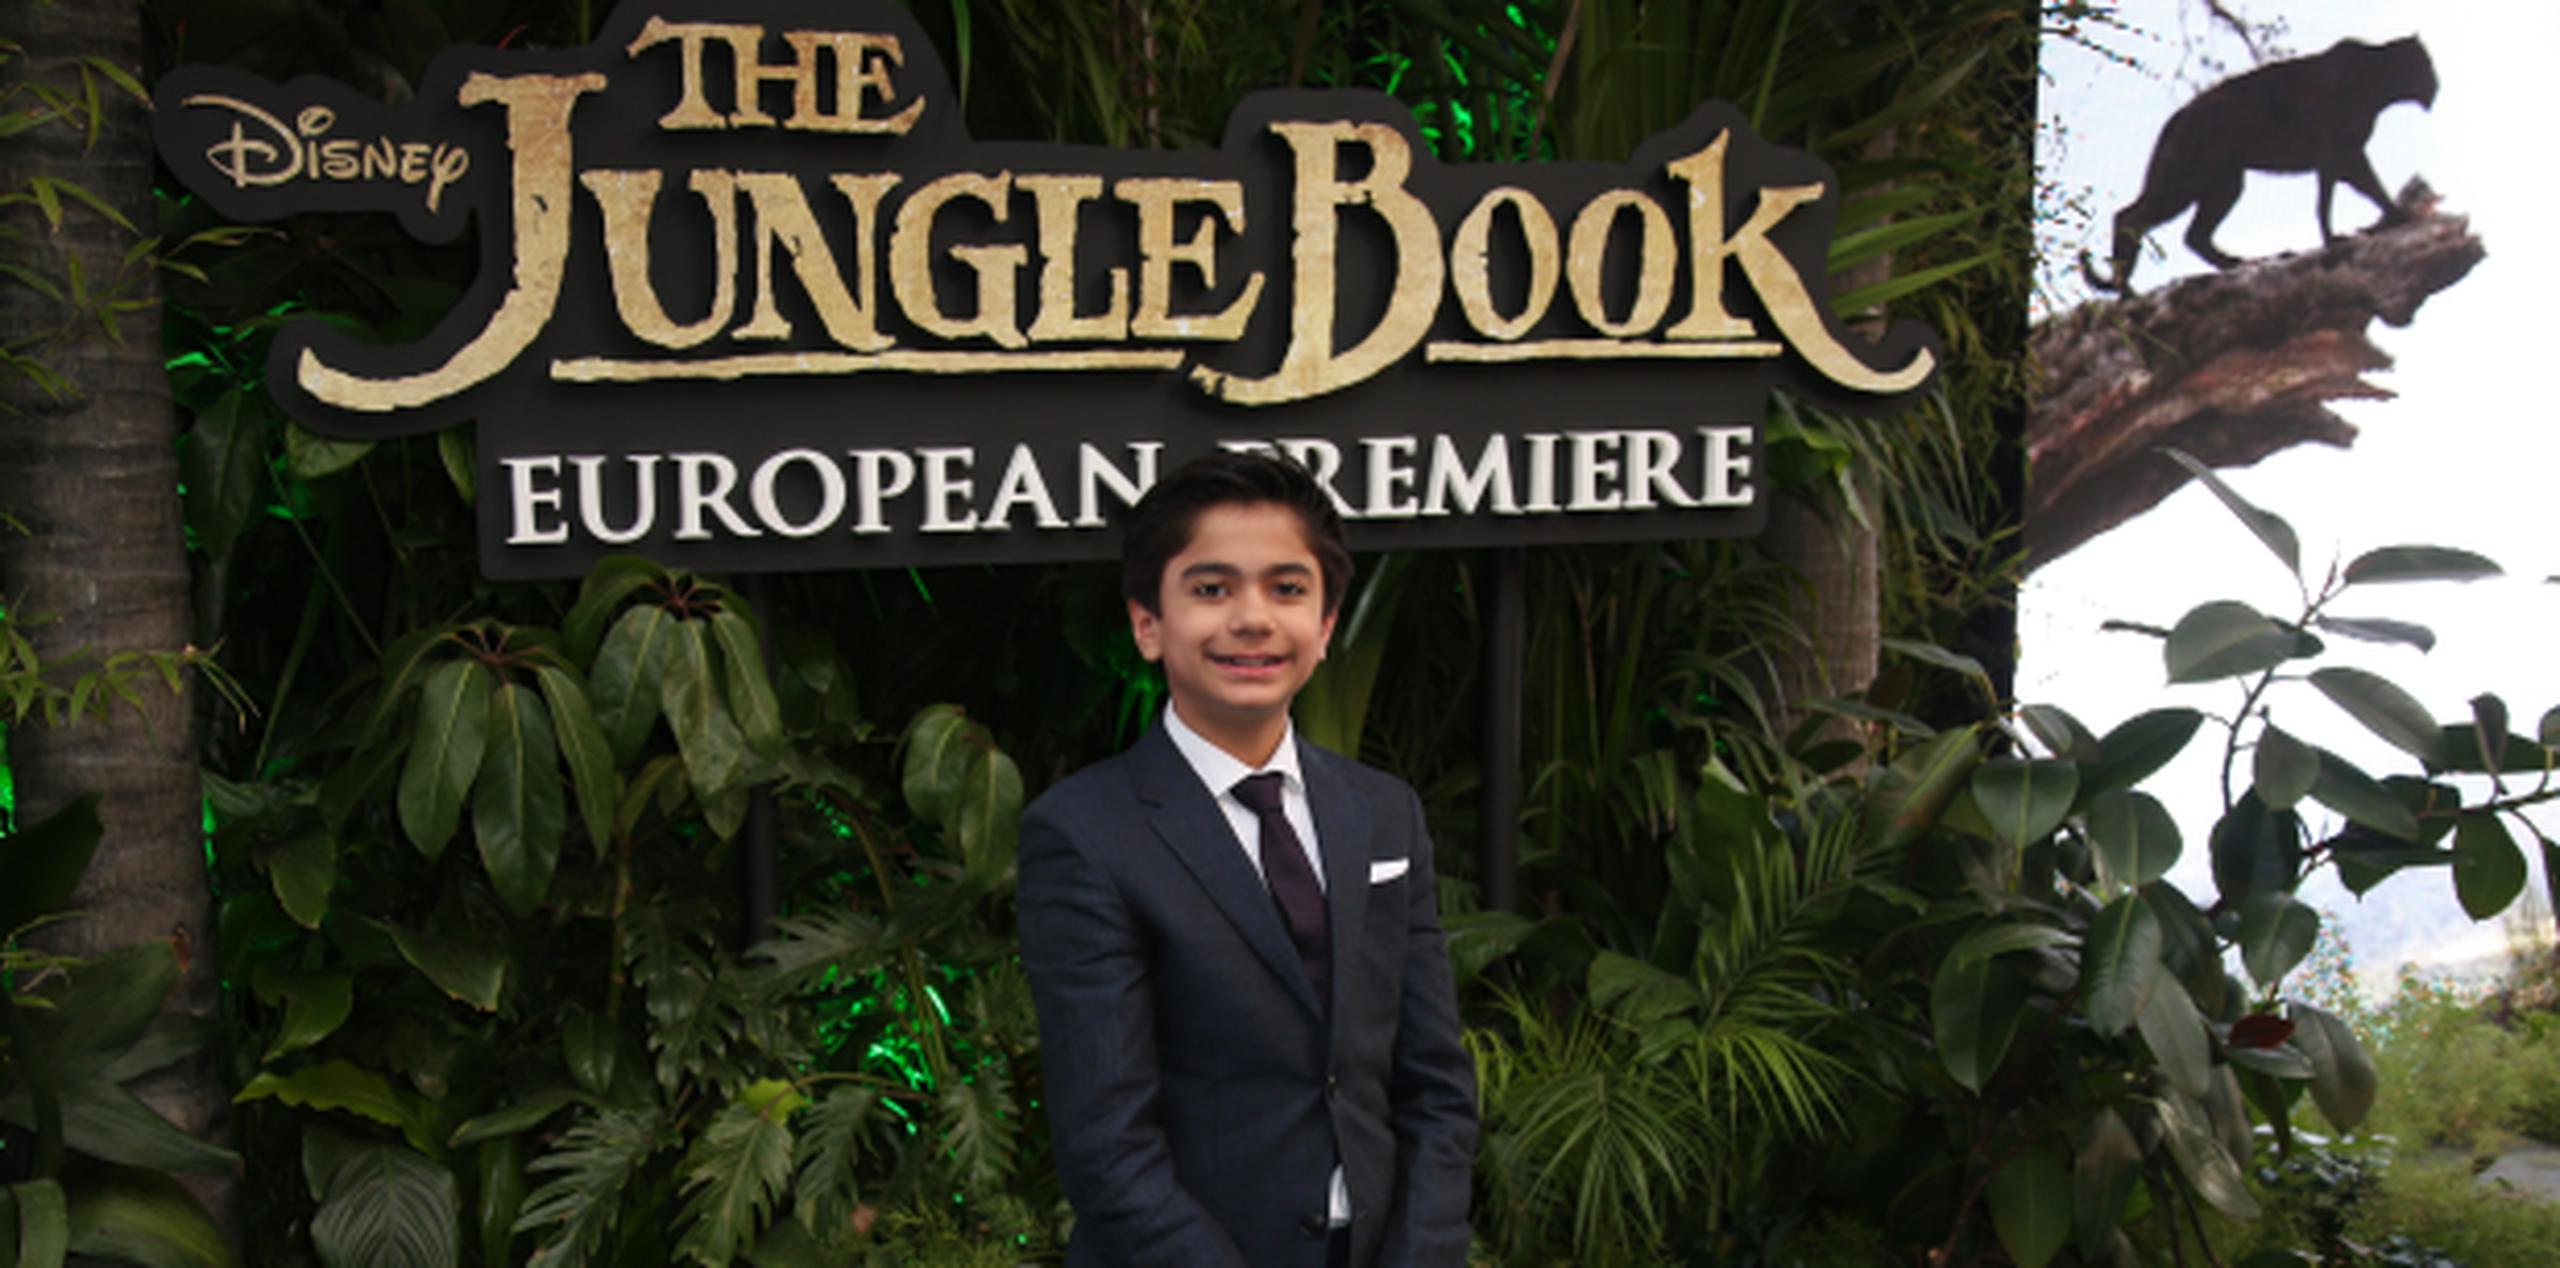 El joven Neel Sethi interpreta a Mowgli, el protagonista humano de la cinta. (AP)